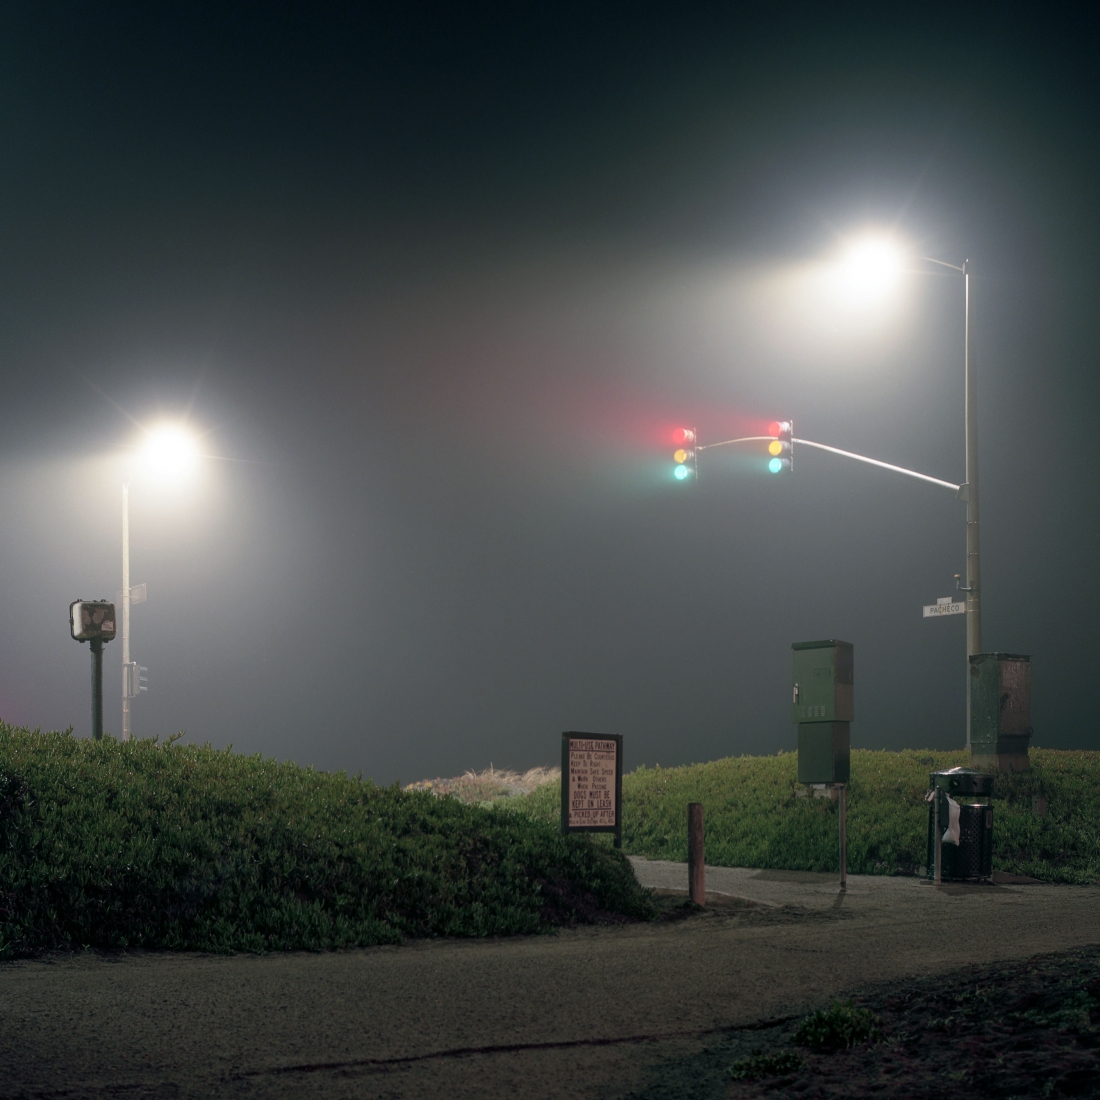 The Foggy Night